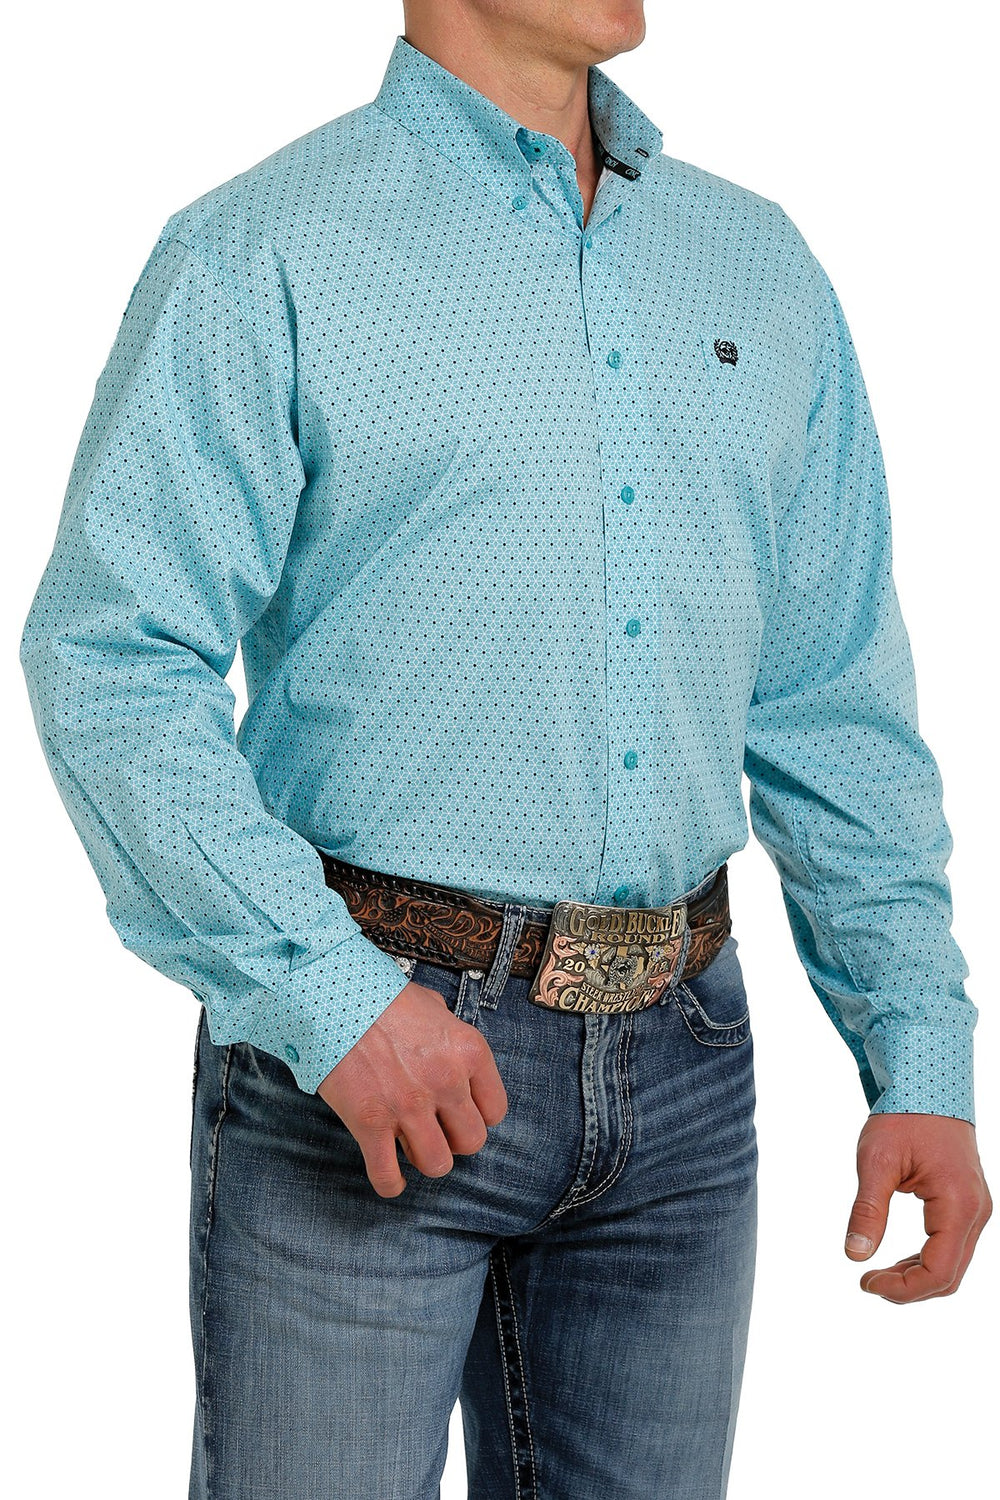 Cinch - Mens Turquoise Honeycomb Arena Shirt